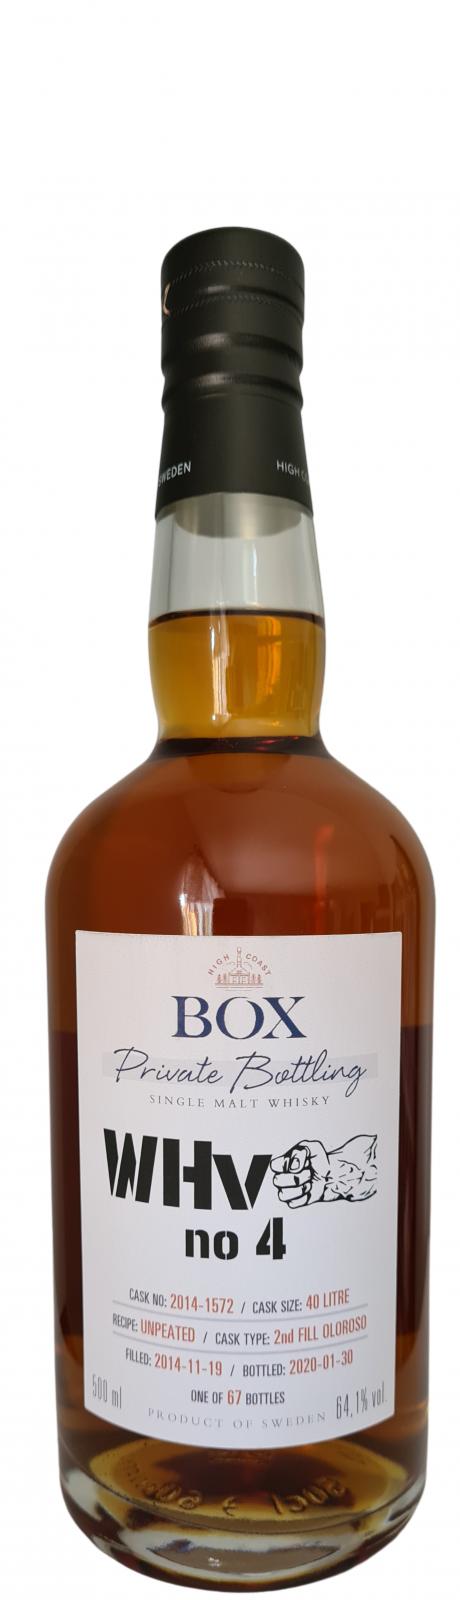 Box 2014 WHv no 4 2nd Fill Oloroso 2014-1572 WhiskyHulken's vanner 64.1% 500ml